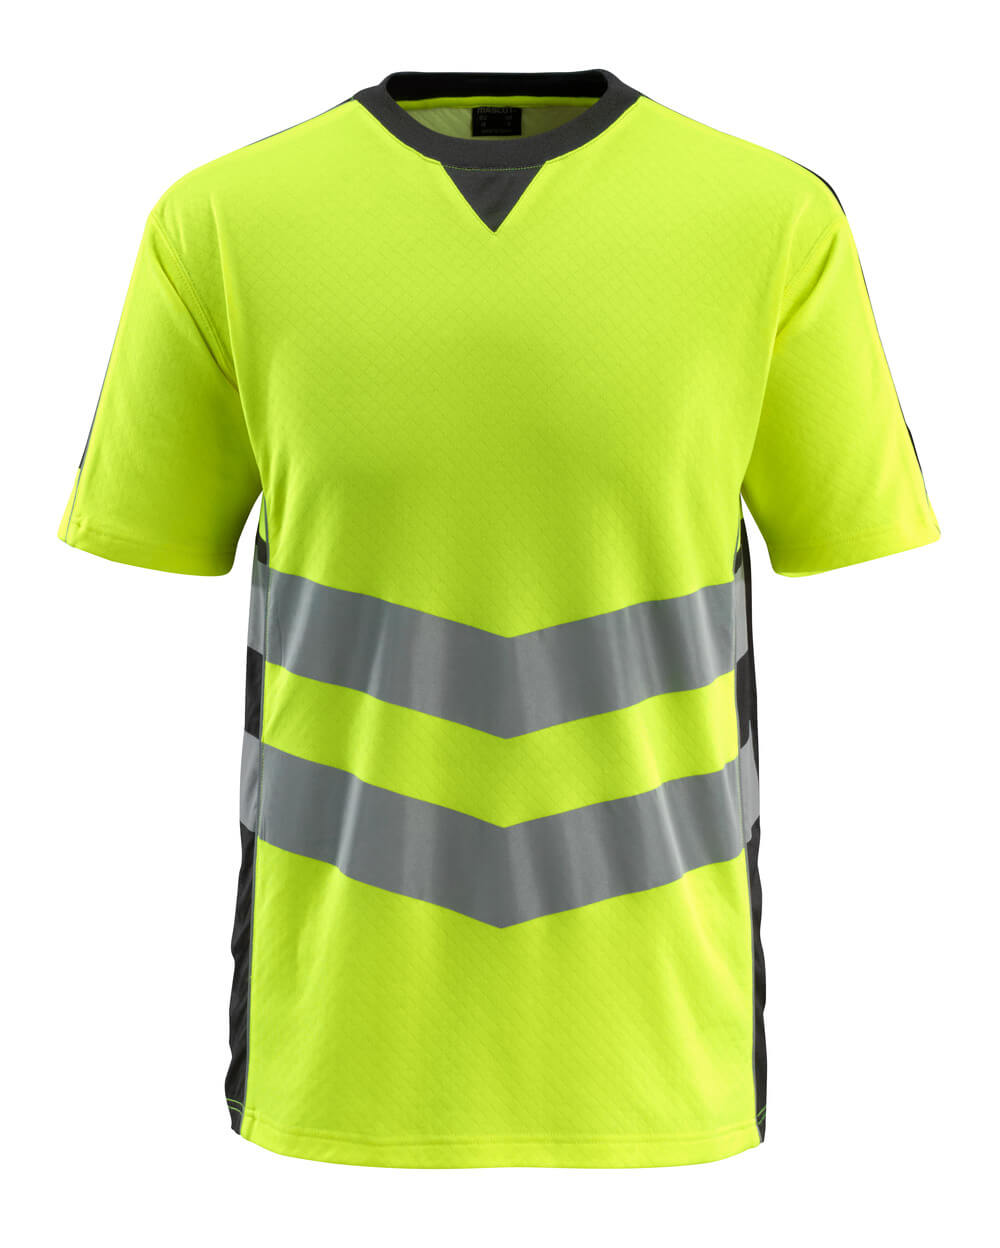 Mascot SAFE SUPREME  Sandwell T-shirt 50127 hi-vis yellow/black